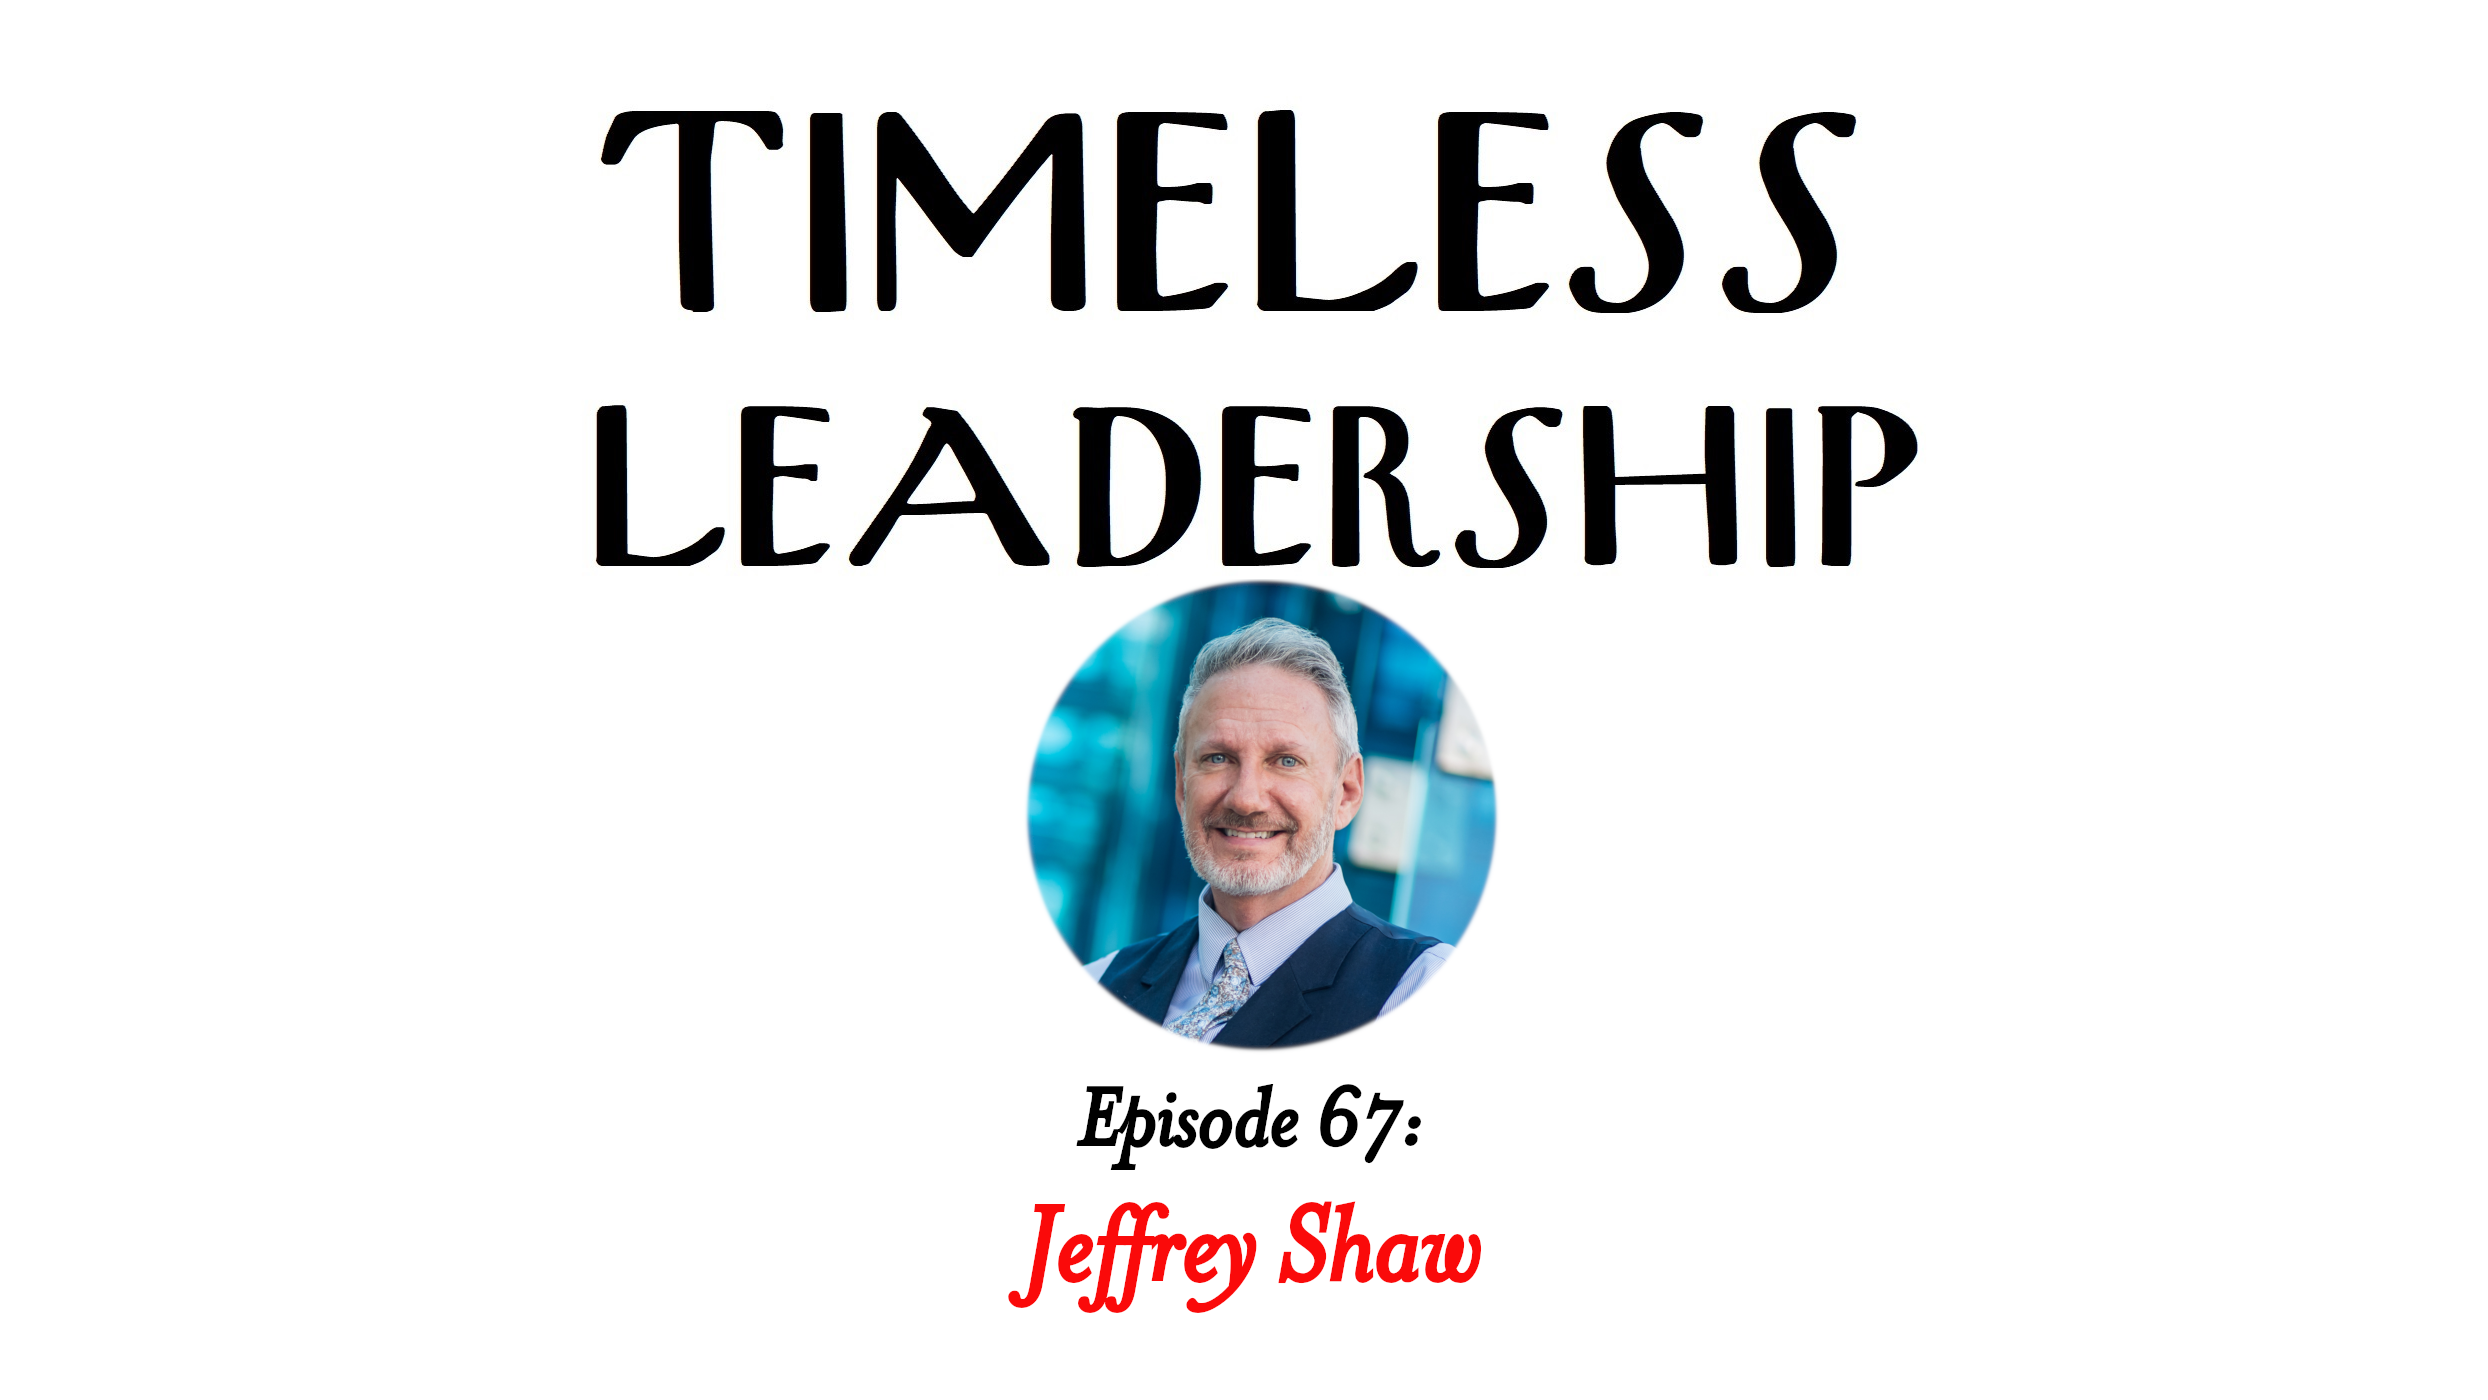 Episode 67: The Self-Employed Life with Jeffrey Shaw